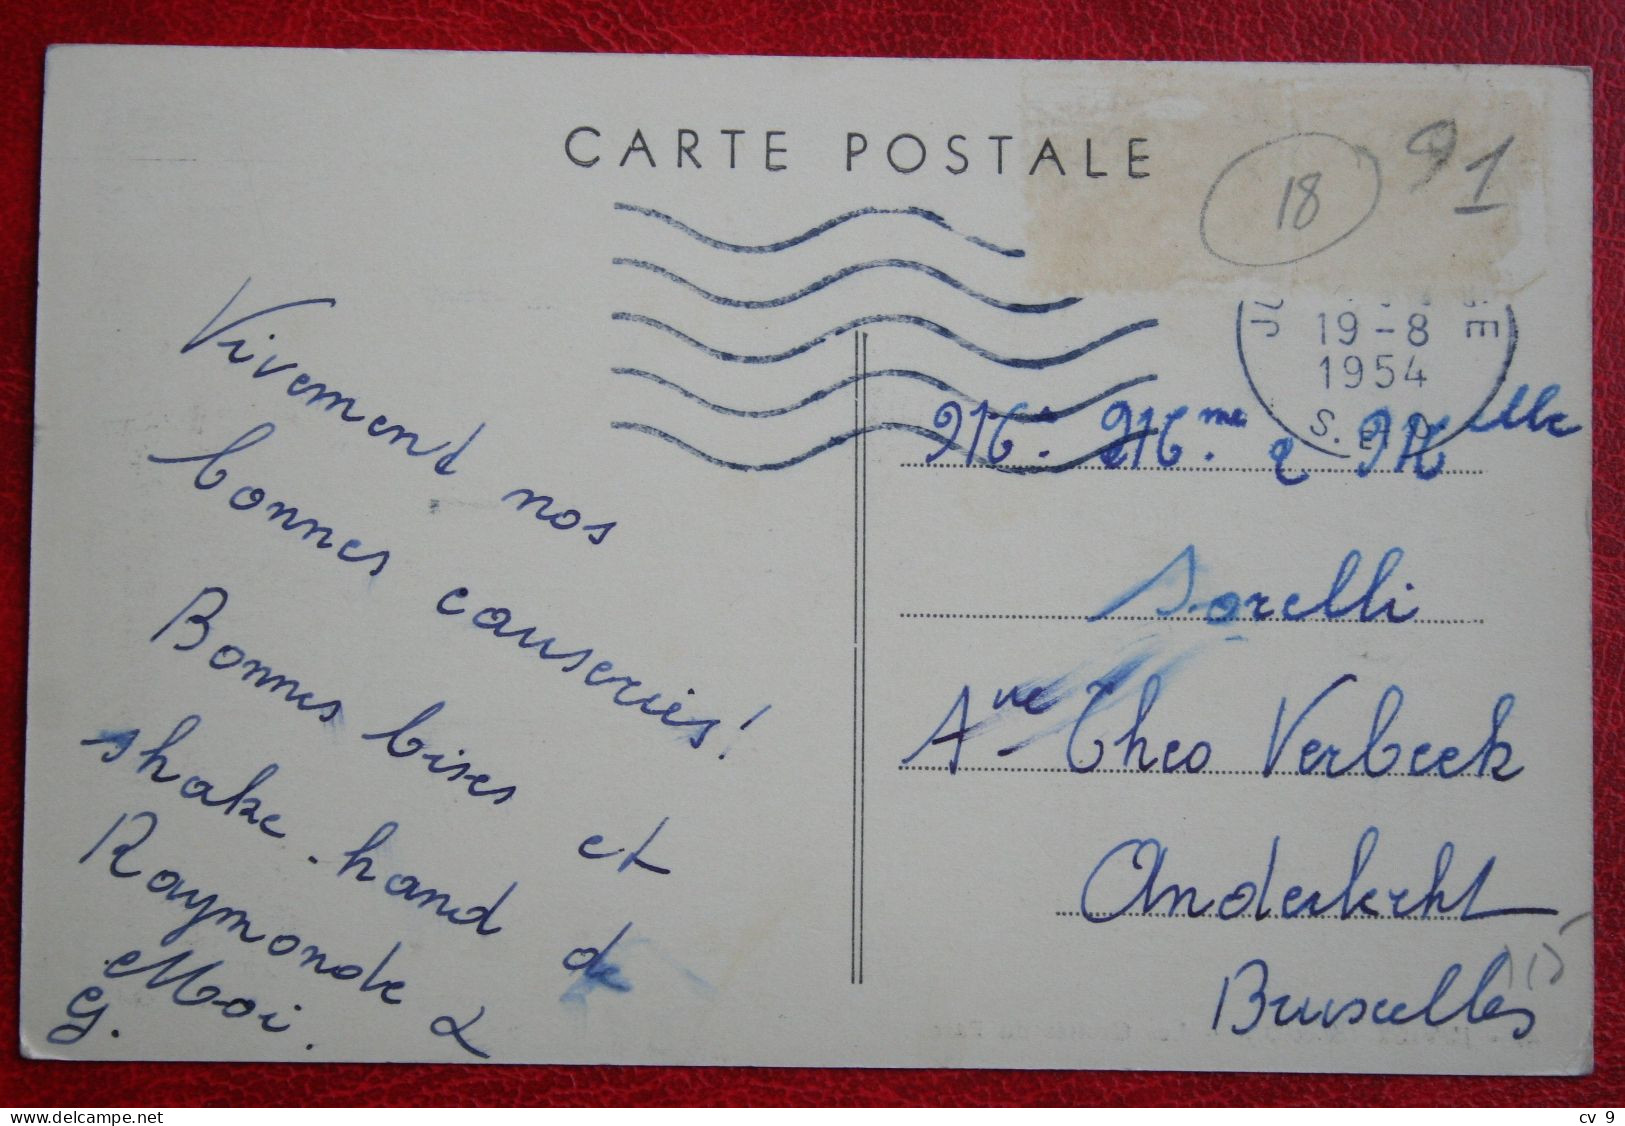 CP JUVISY Les Grottes Du Parc France Voyagee Used Postcard B290 - Juvisy-sur-Orge